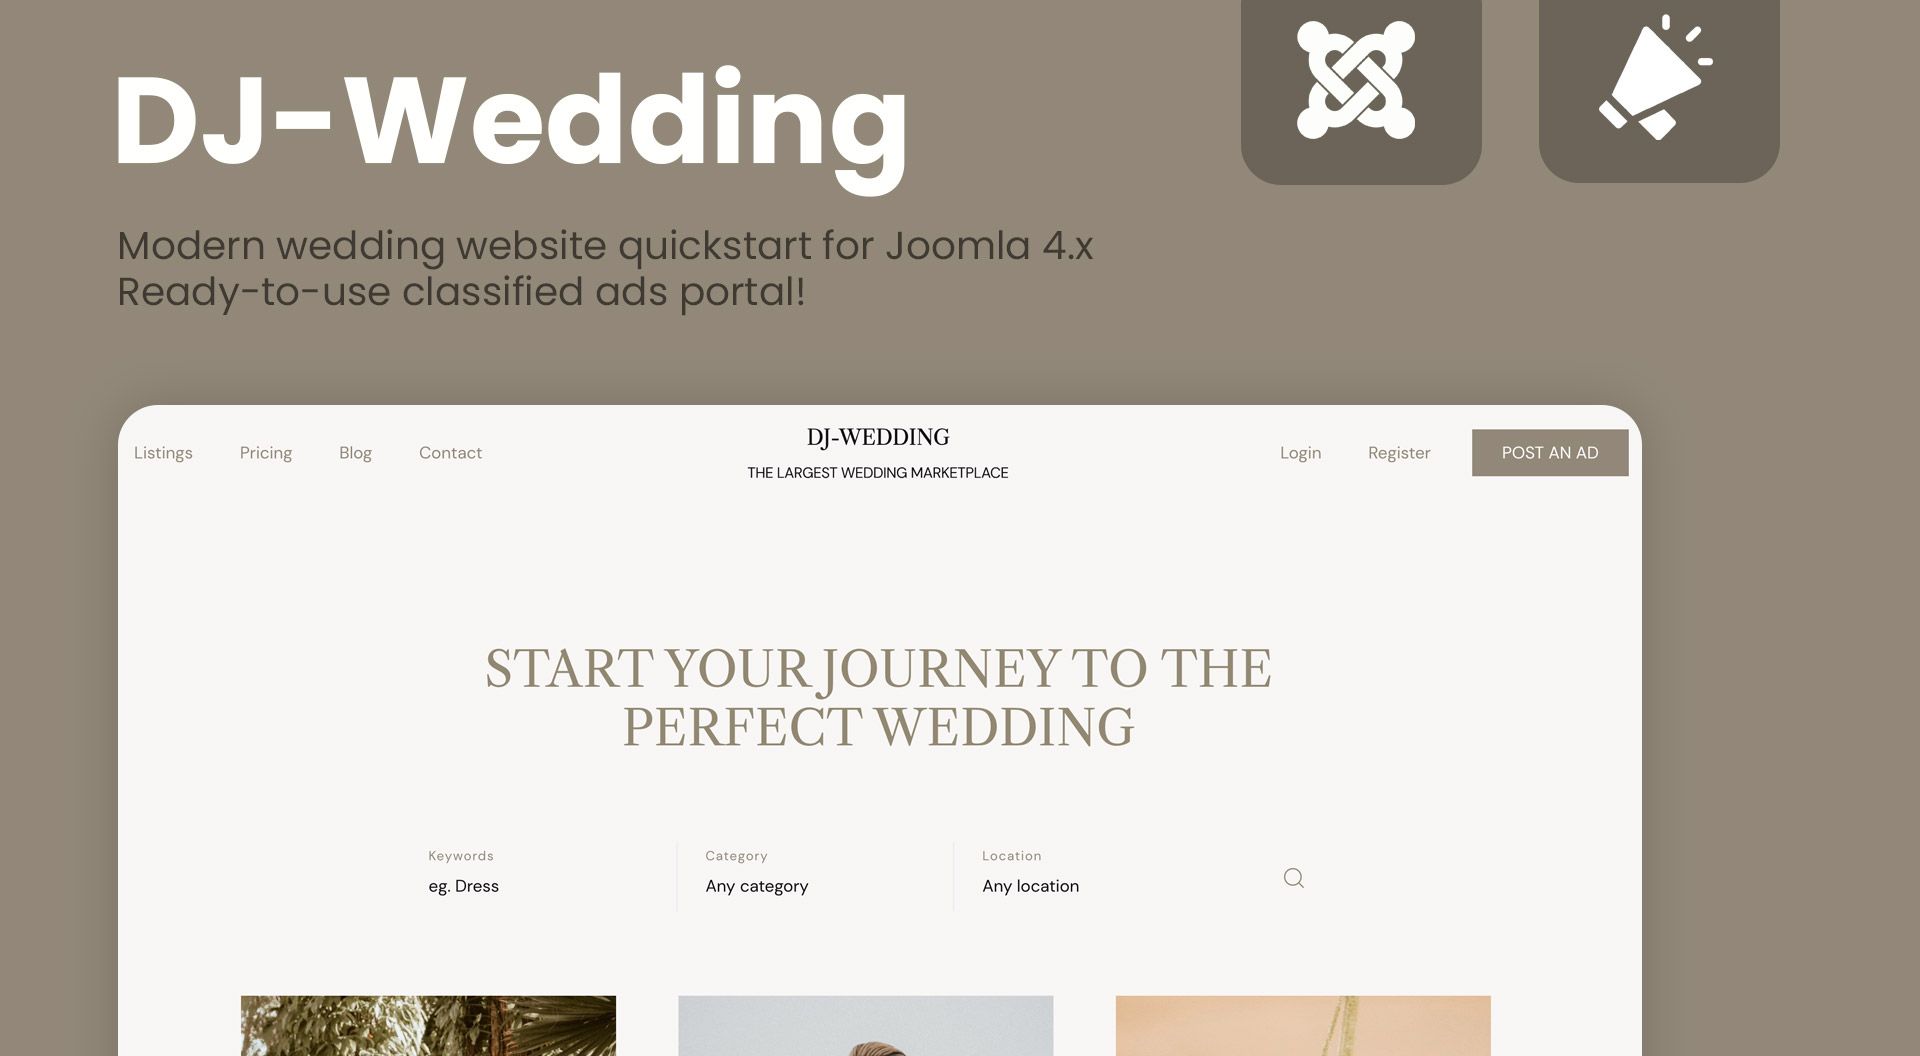 Meet DJ-Wedding - Joomla 4.x wedding template for classified ads portal